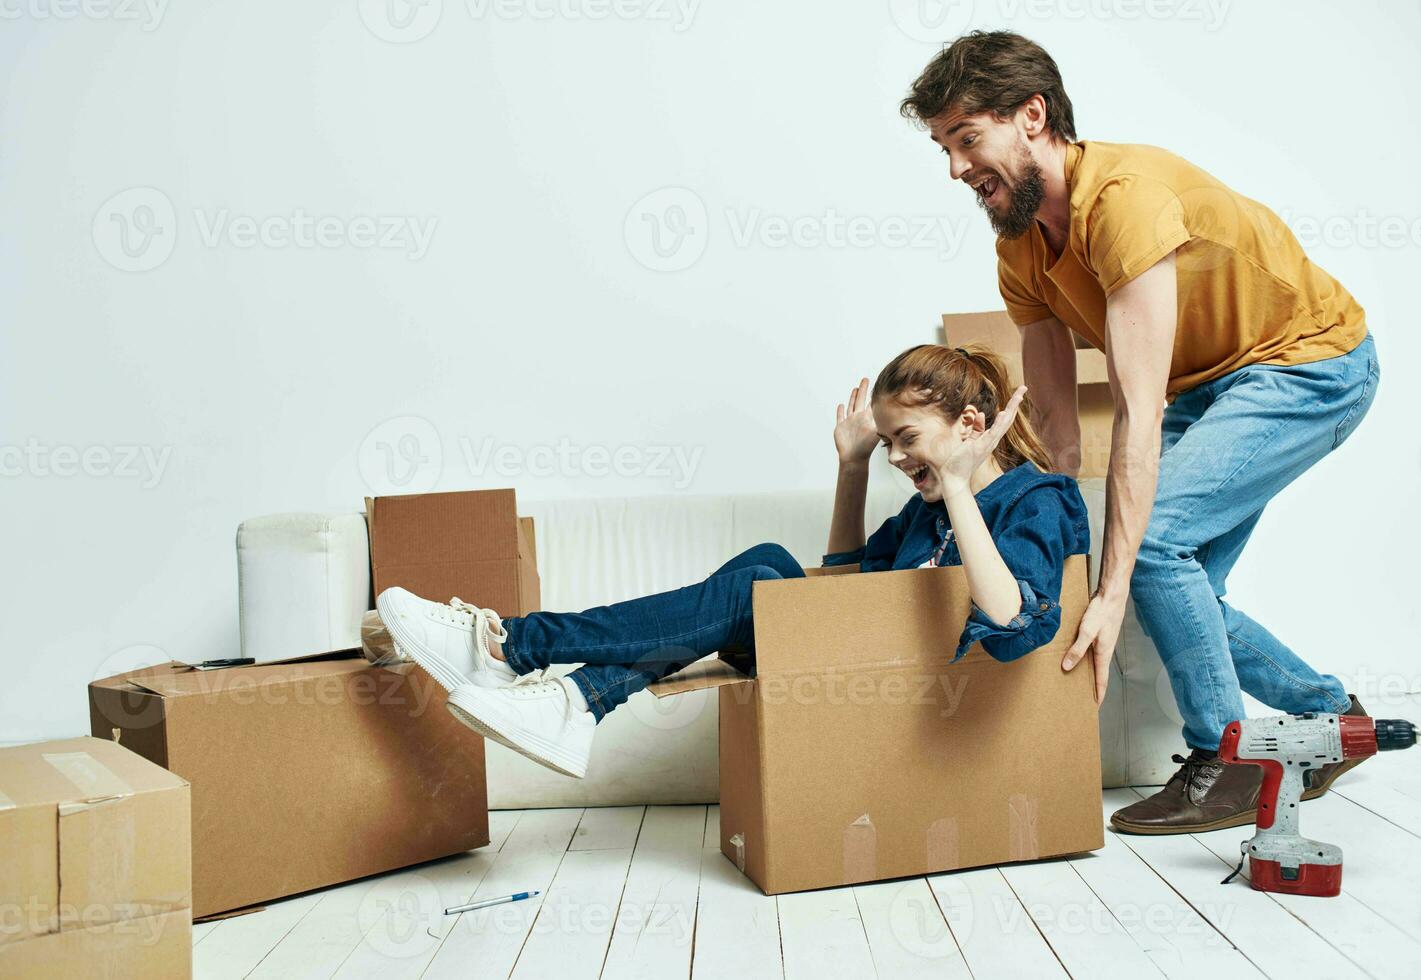 man and woman on white sofa interior cardboard boxes lifestyle photo